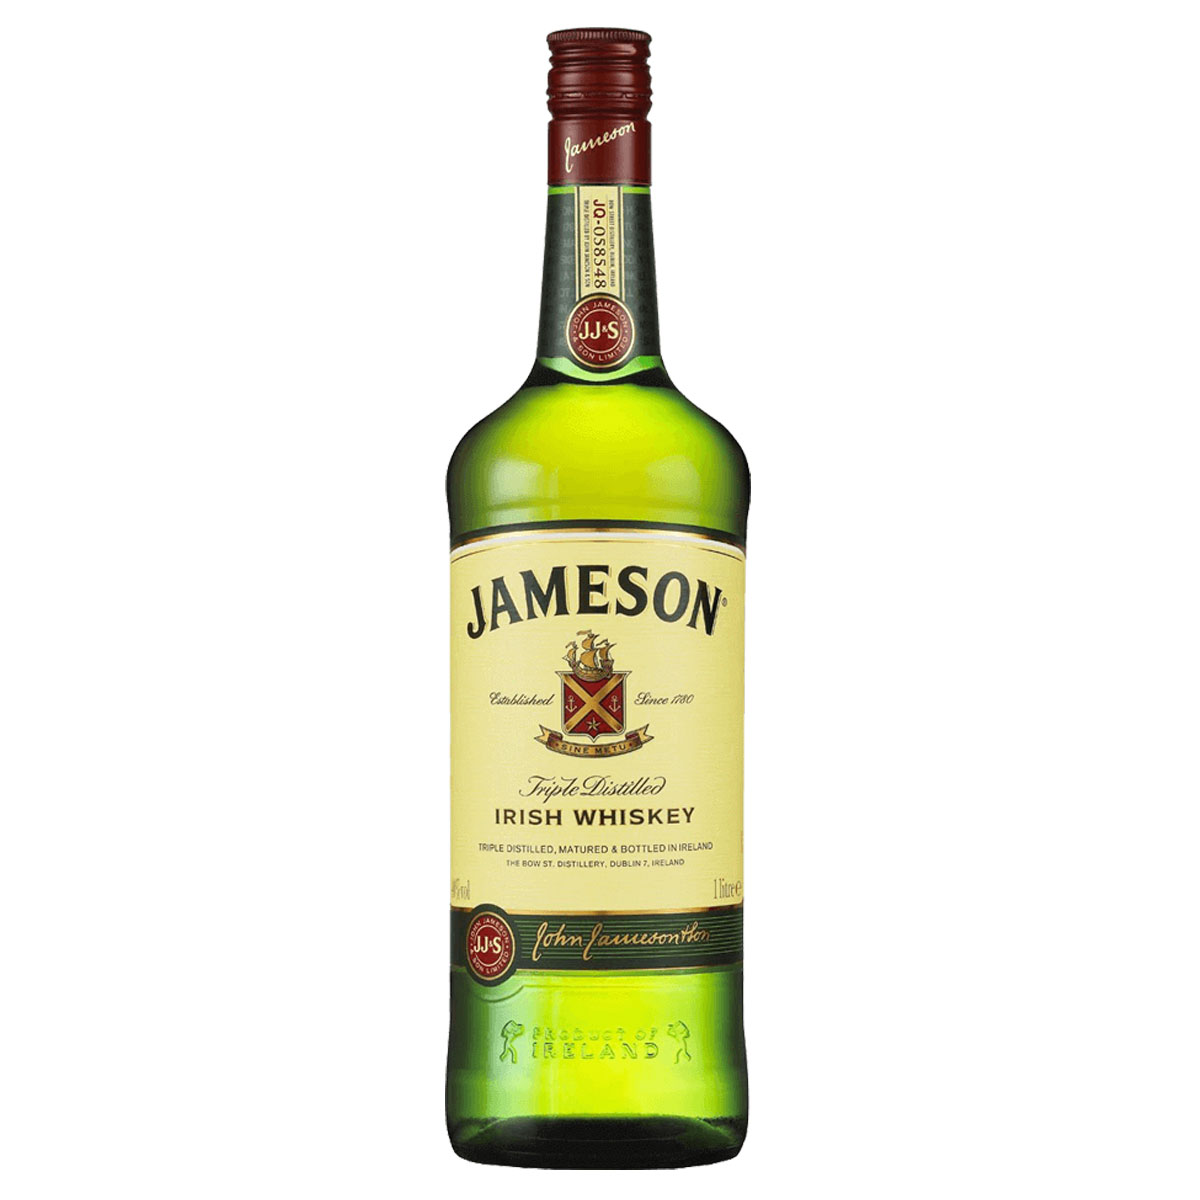 a bottle of jameson whisky